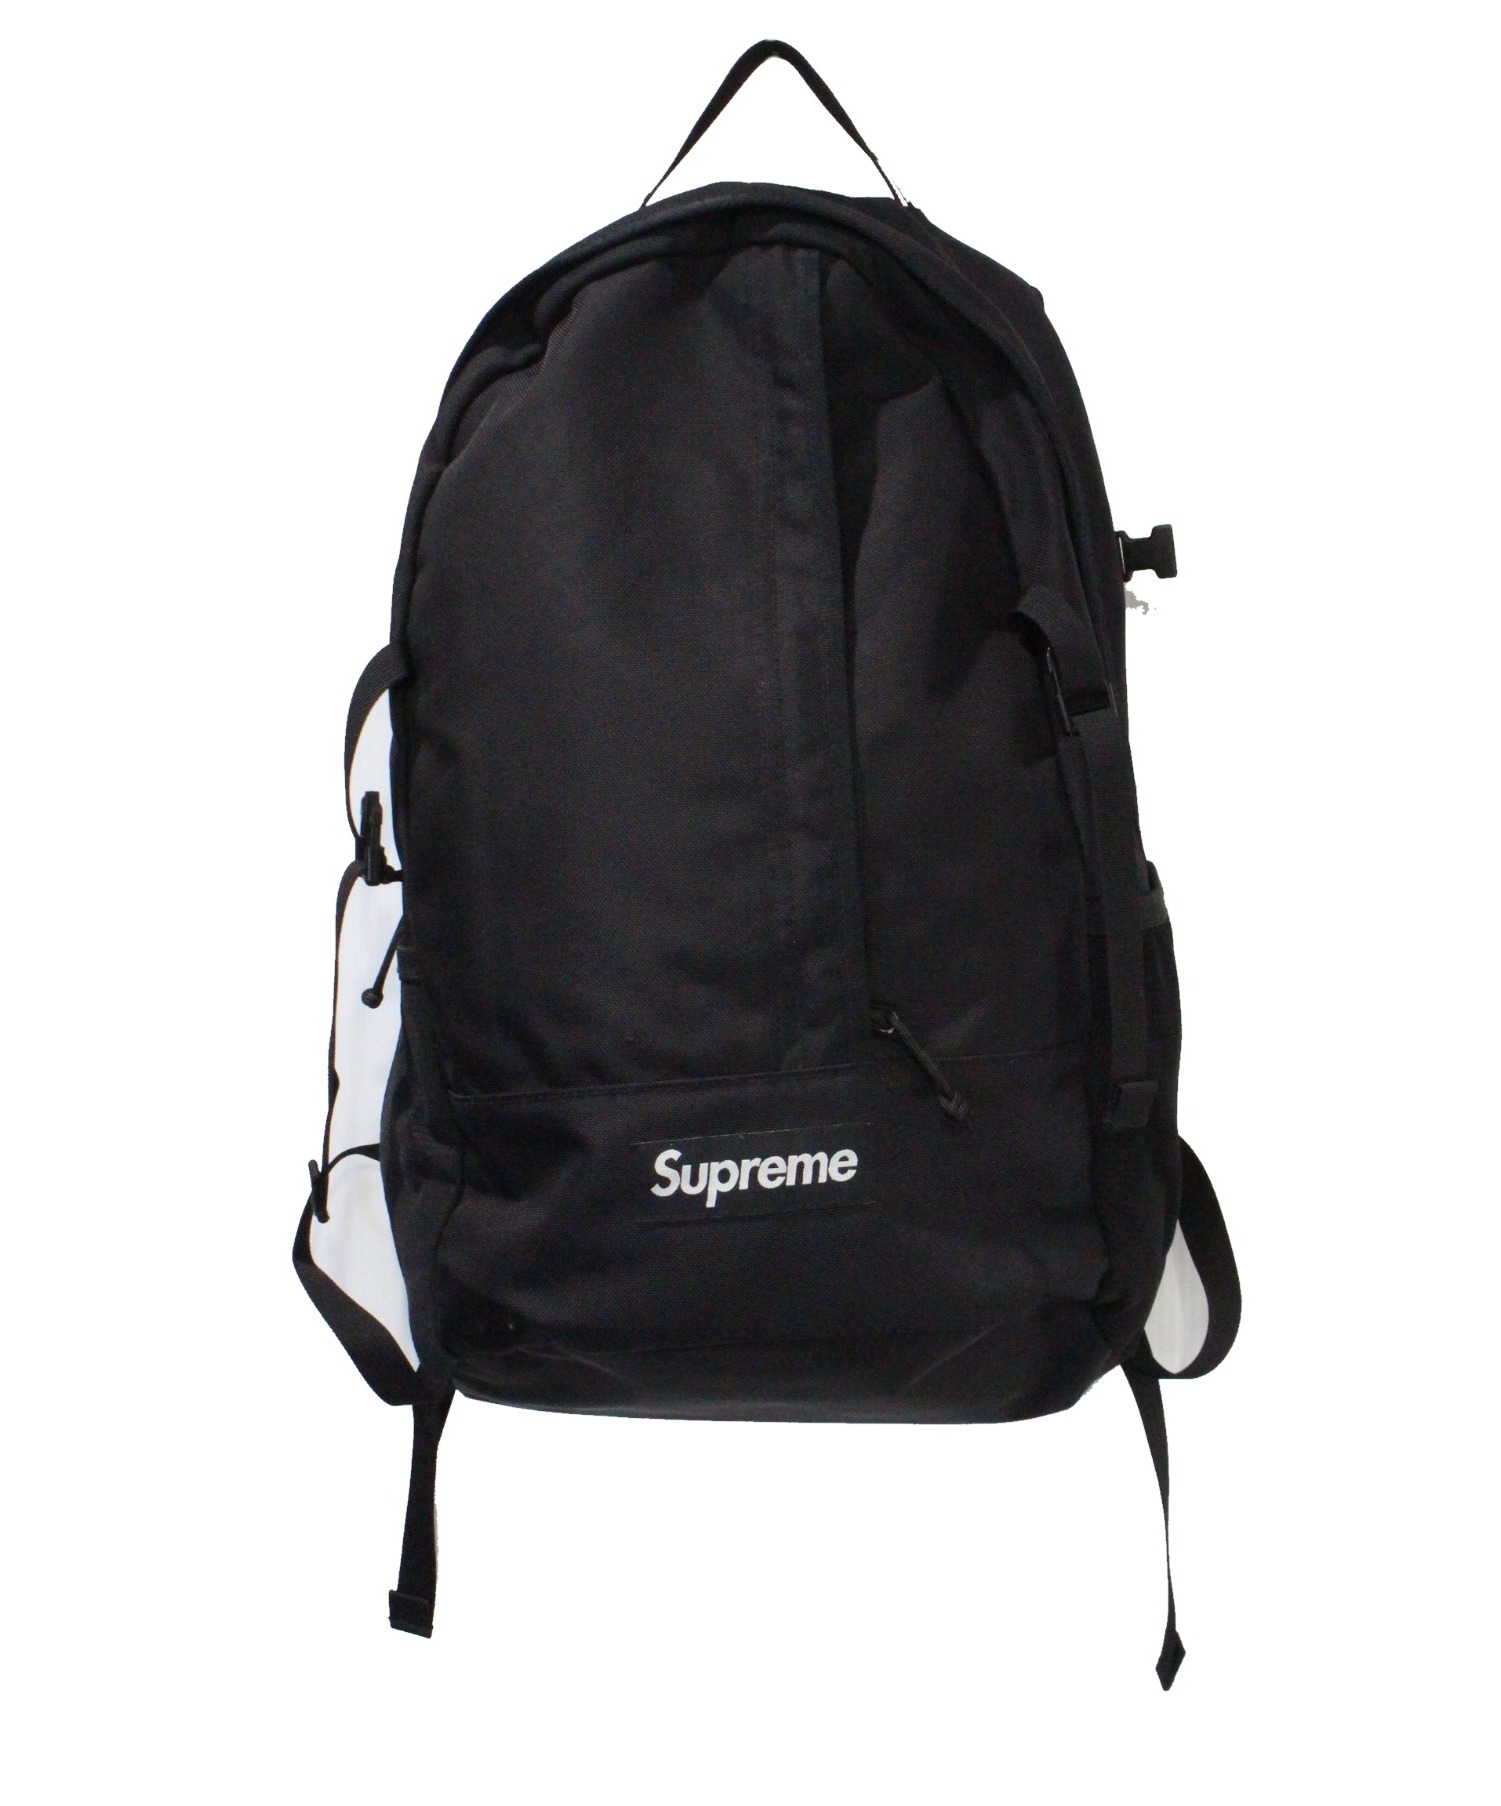 Supreme Backpack シュプリーム バックパック リュック 18SS